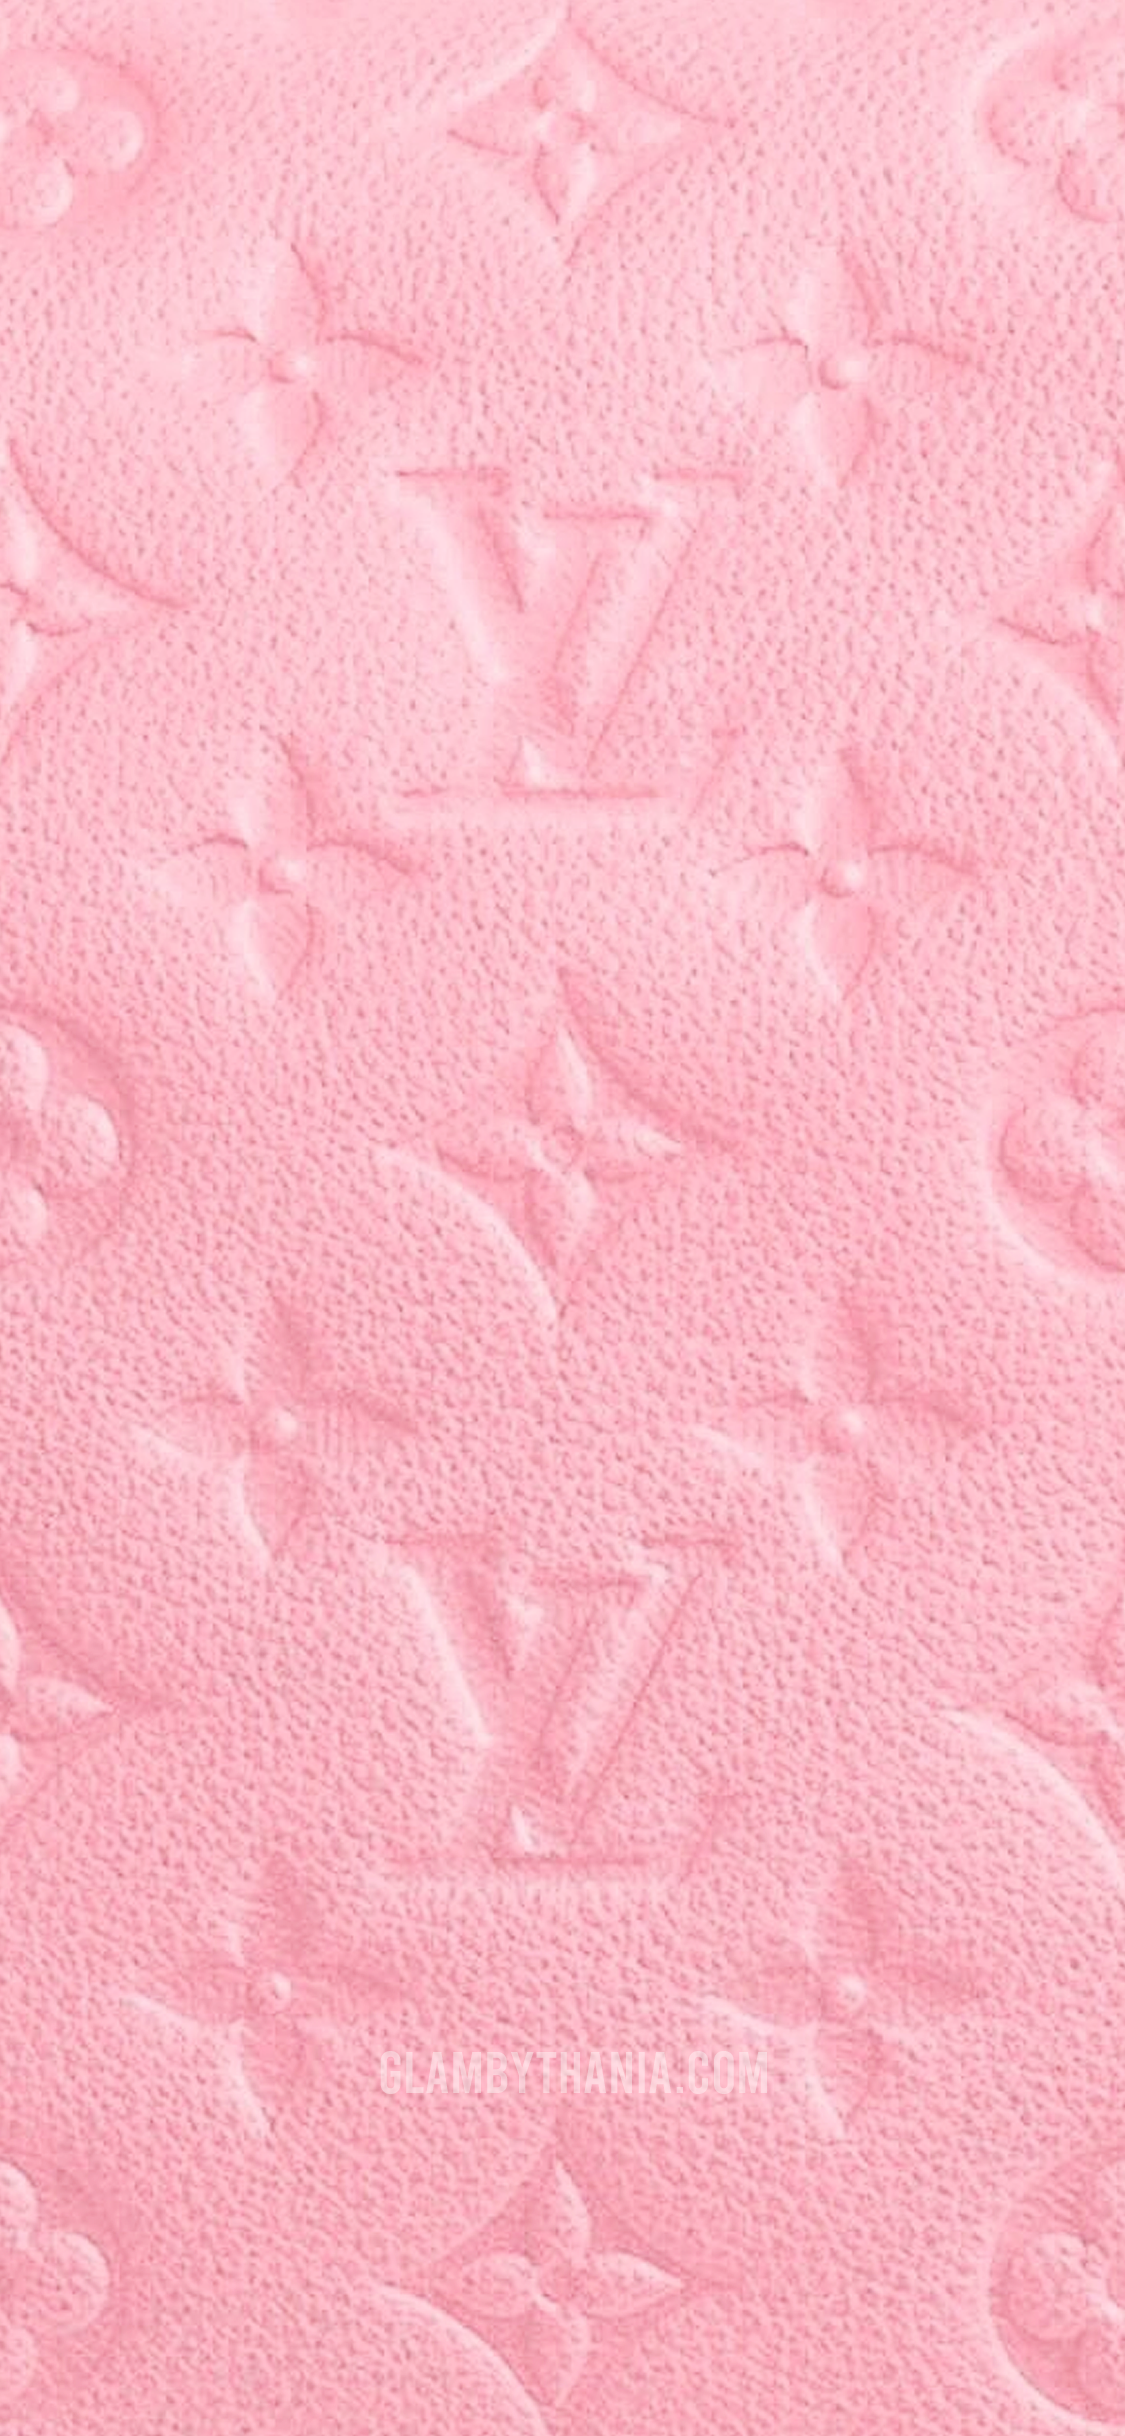 FREE Pink & Girly Luxury iphone wallpaper